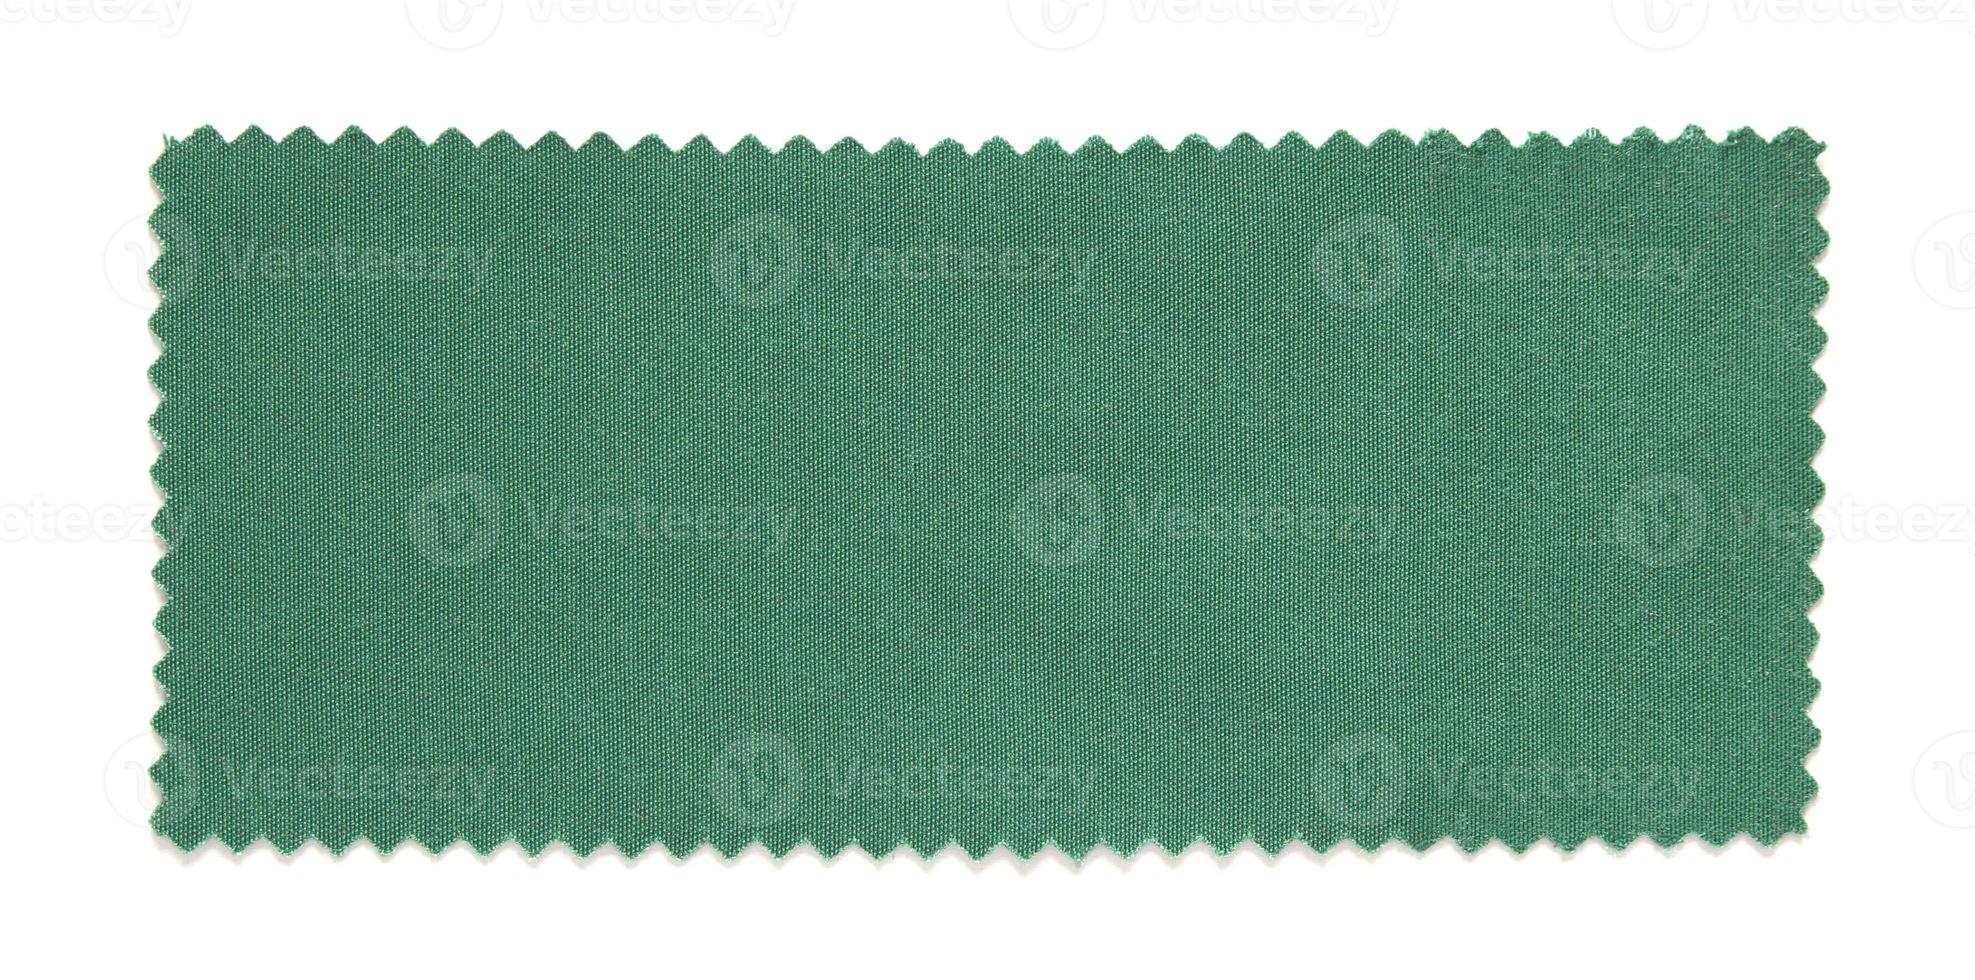 Échantillons de tissu vert isolés sur fond blanc photo